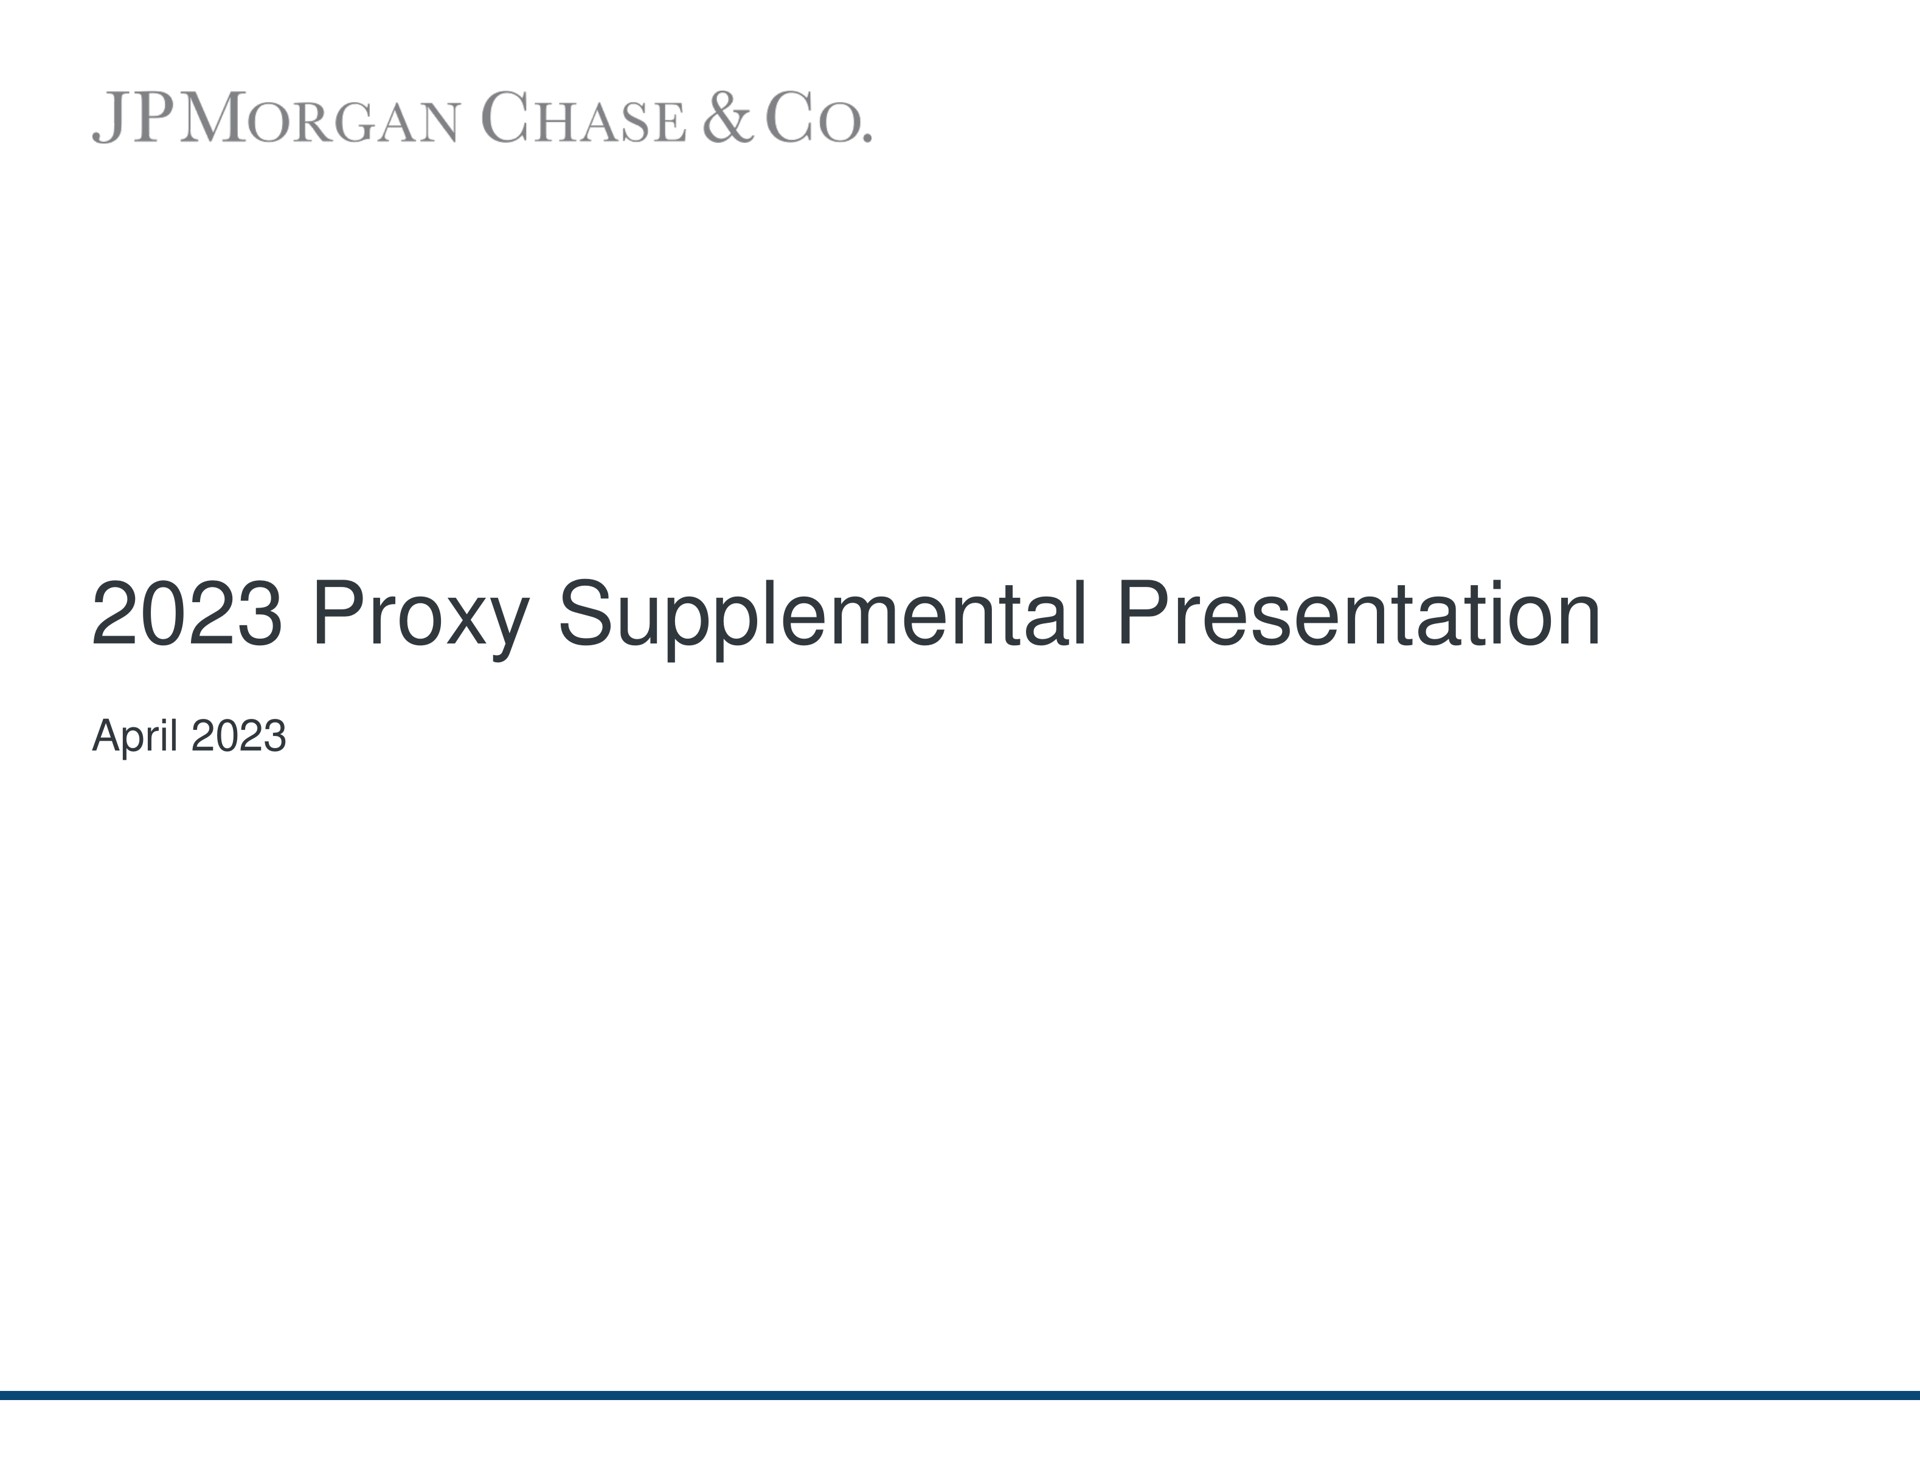 proxy supplemental presentation chase | J.P.Morgan